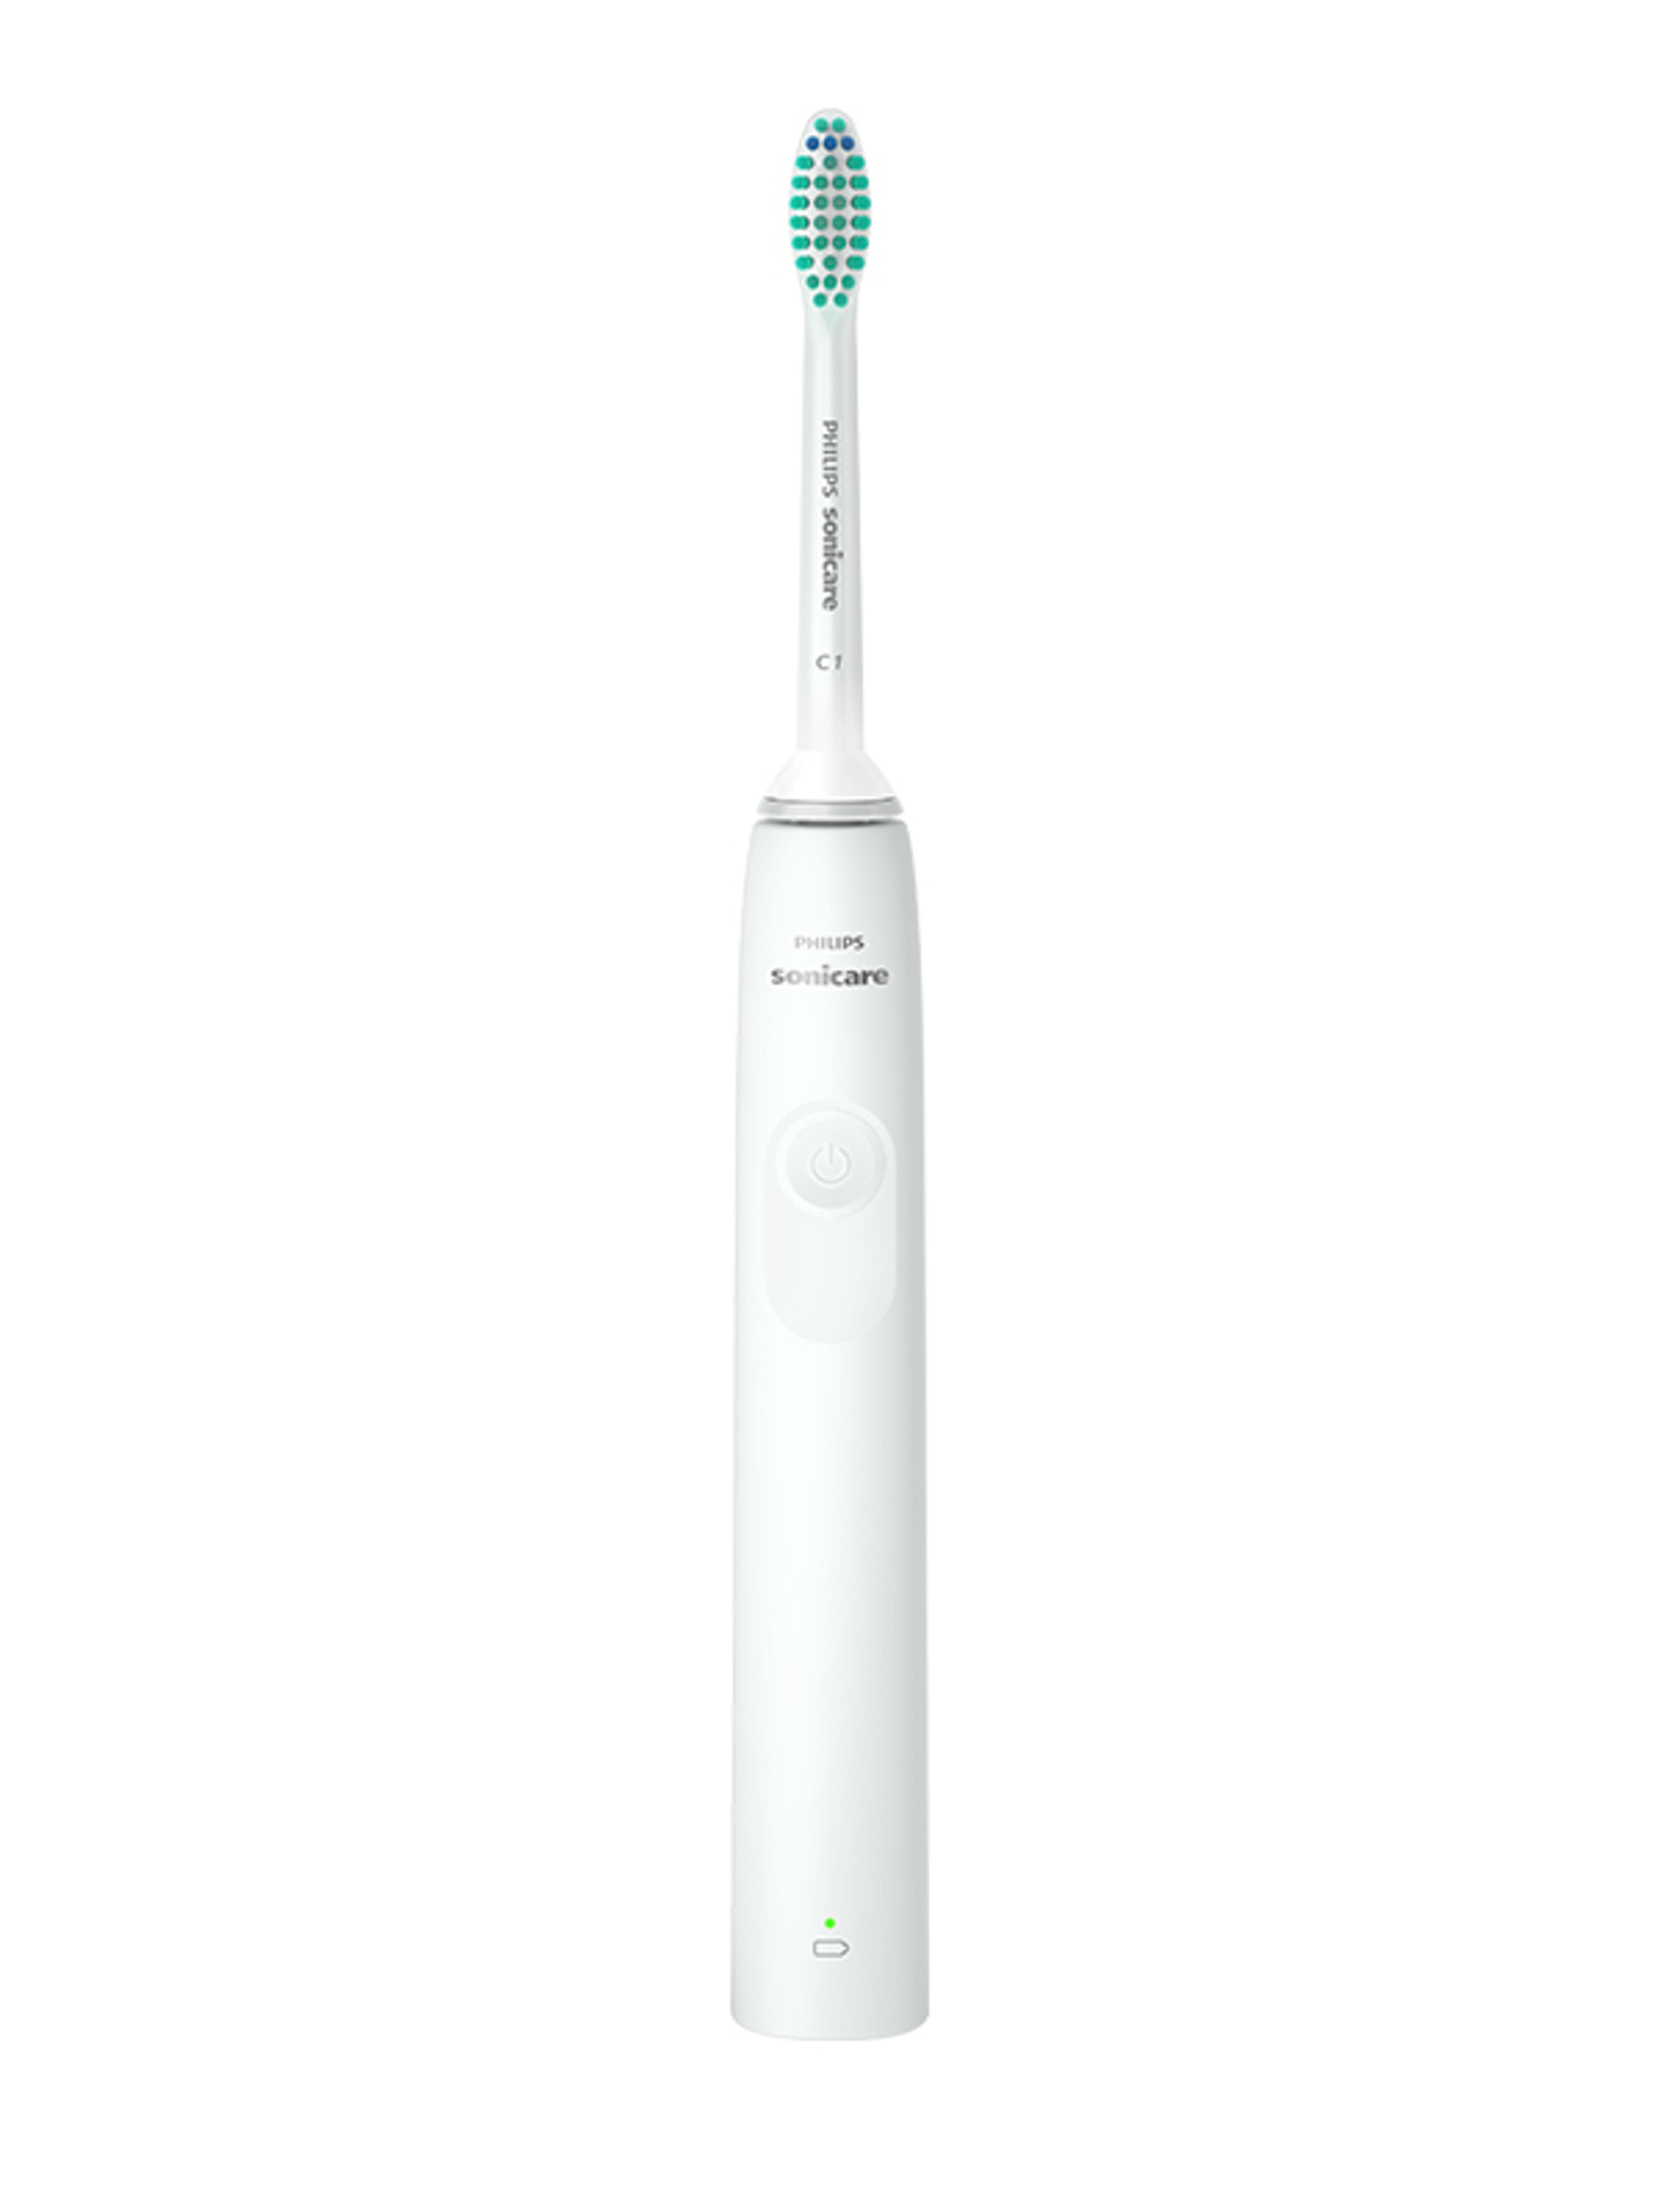 Philips Sonicare S2100 elektromos fogkefe, fehér - 1 db-3